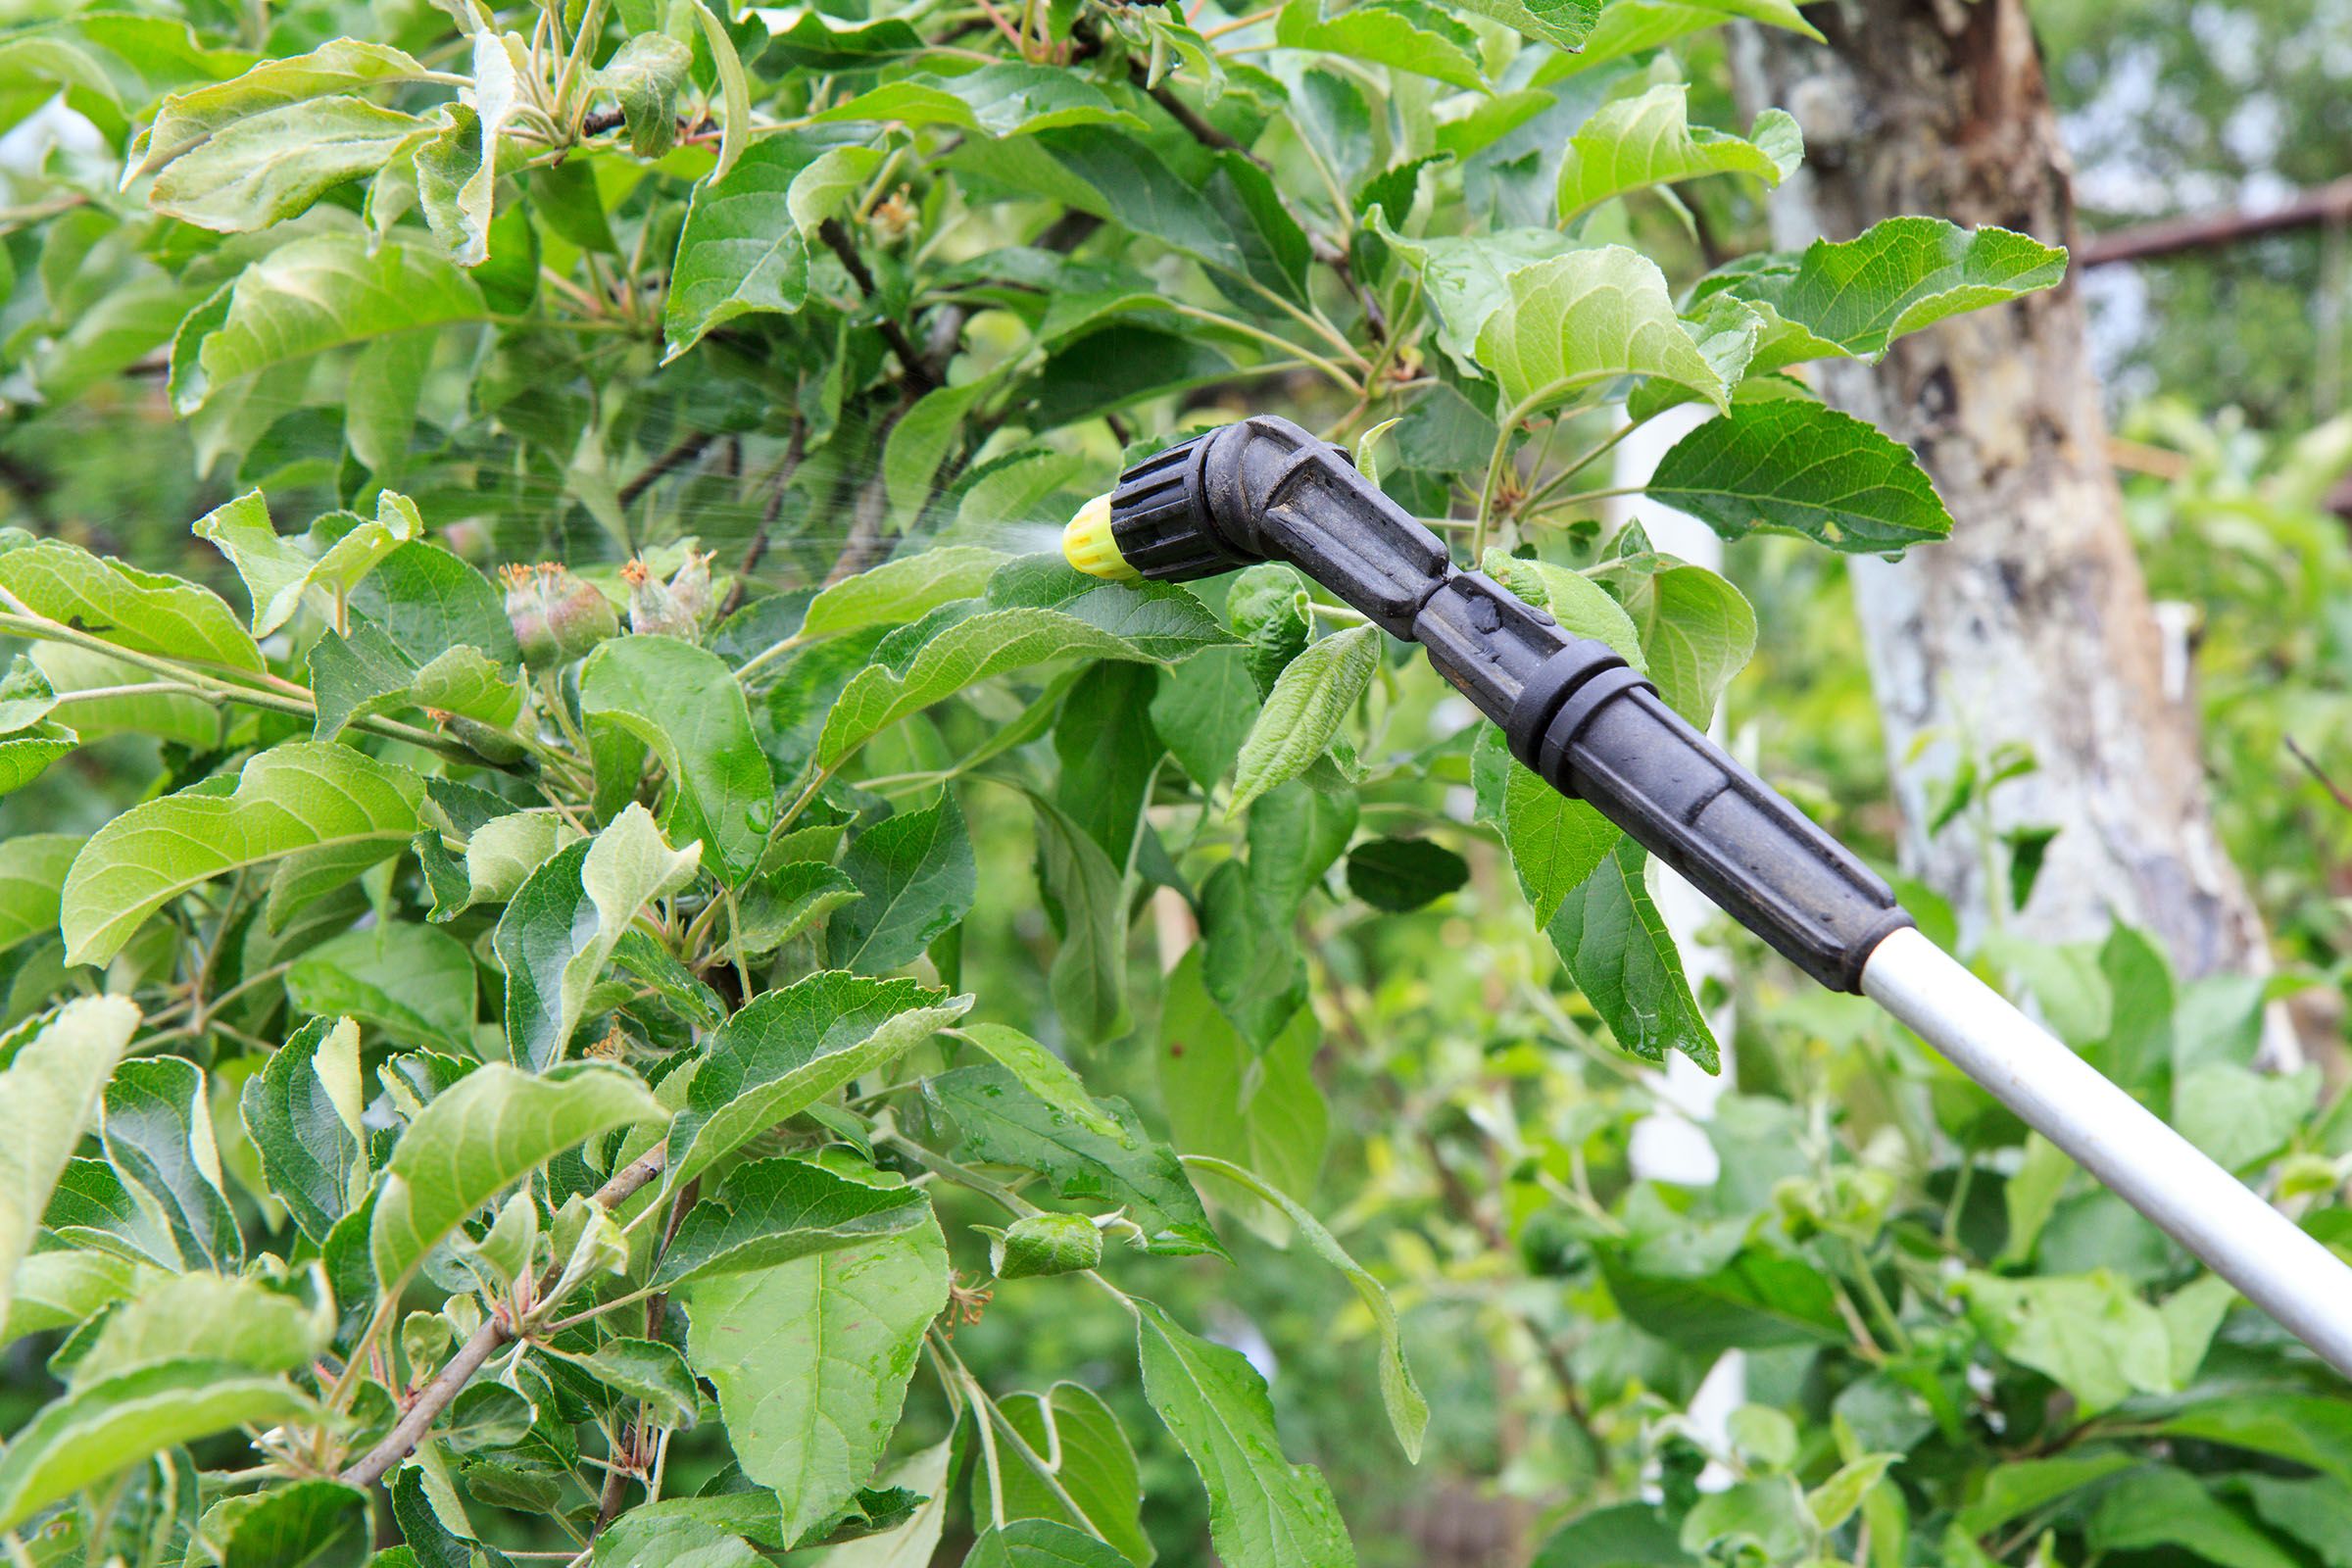 A chemical sprayer wand treats treating a leafy tree.